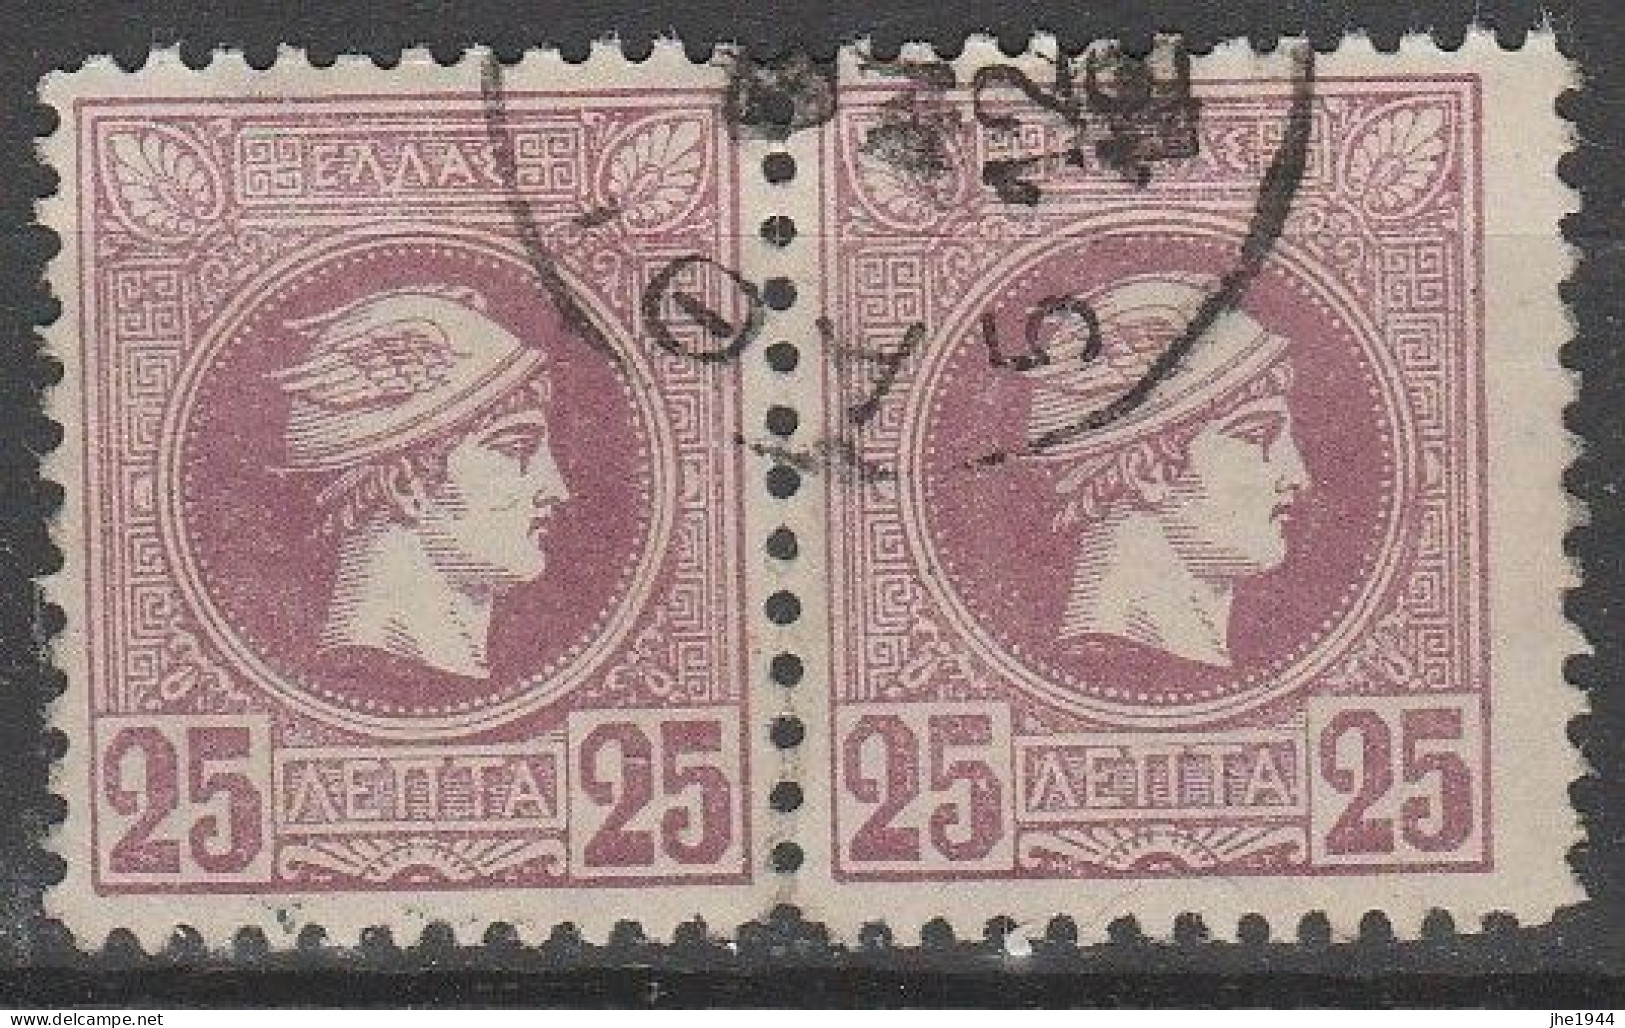 Grece N° 0097 A * Paire De 2 Valeurs 25 L Lilas Brun - Used Stamps